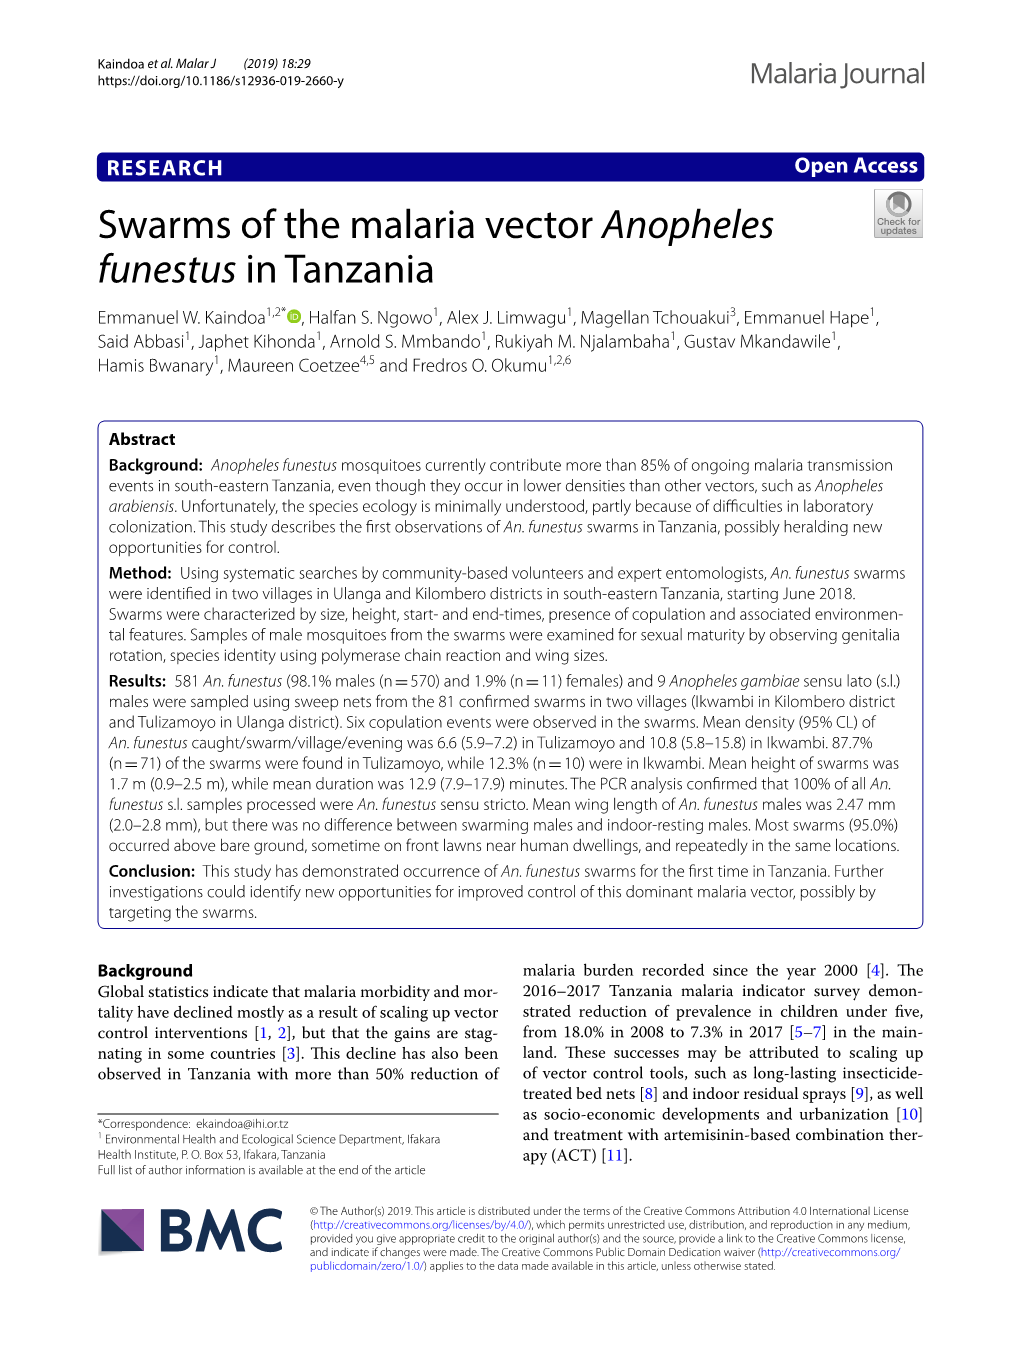 Swarms of the Malaria Vector Anopheles Funestus in Tanzania Emmanuel W